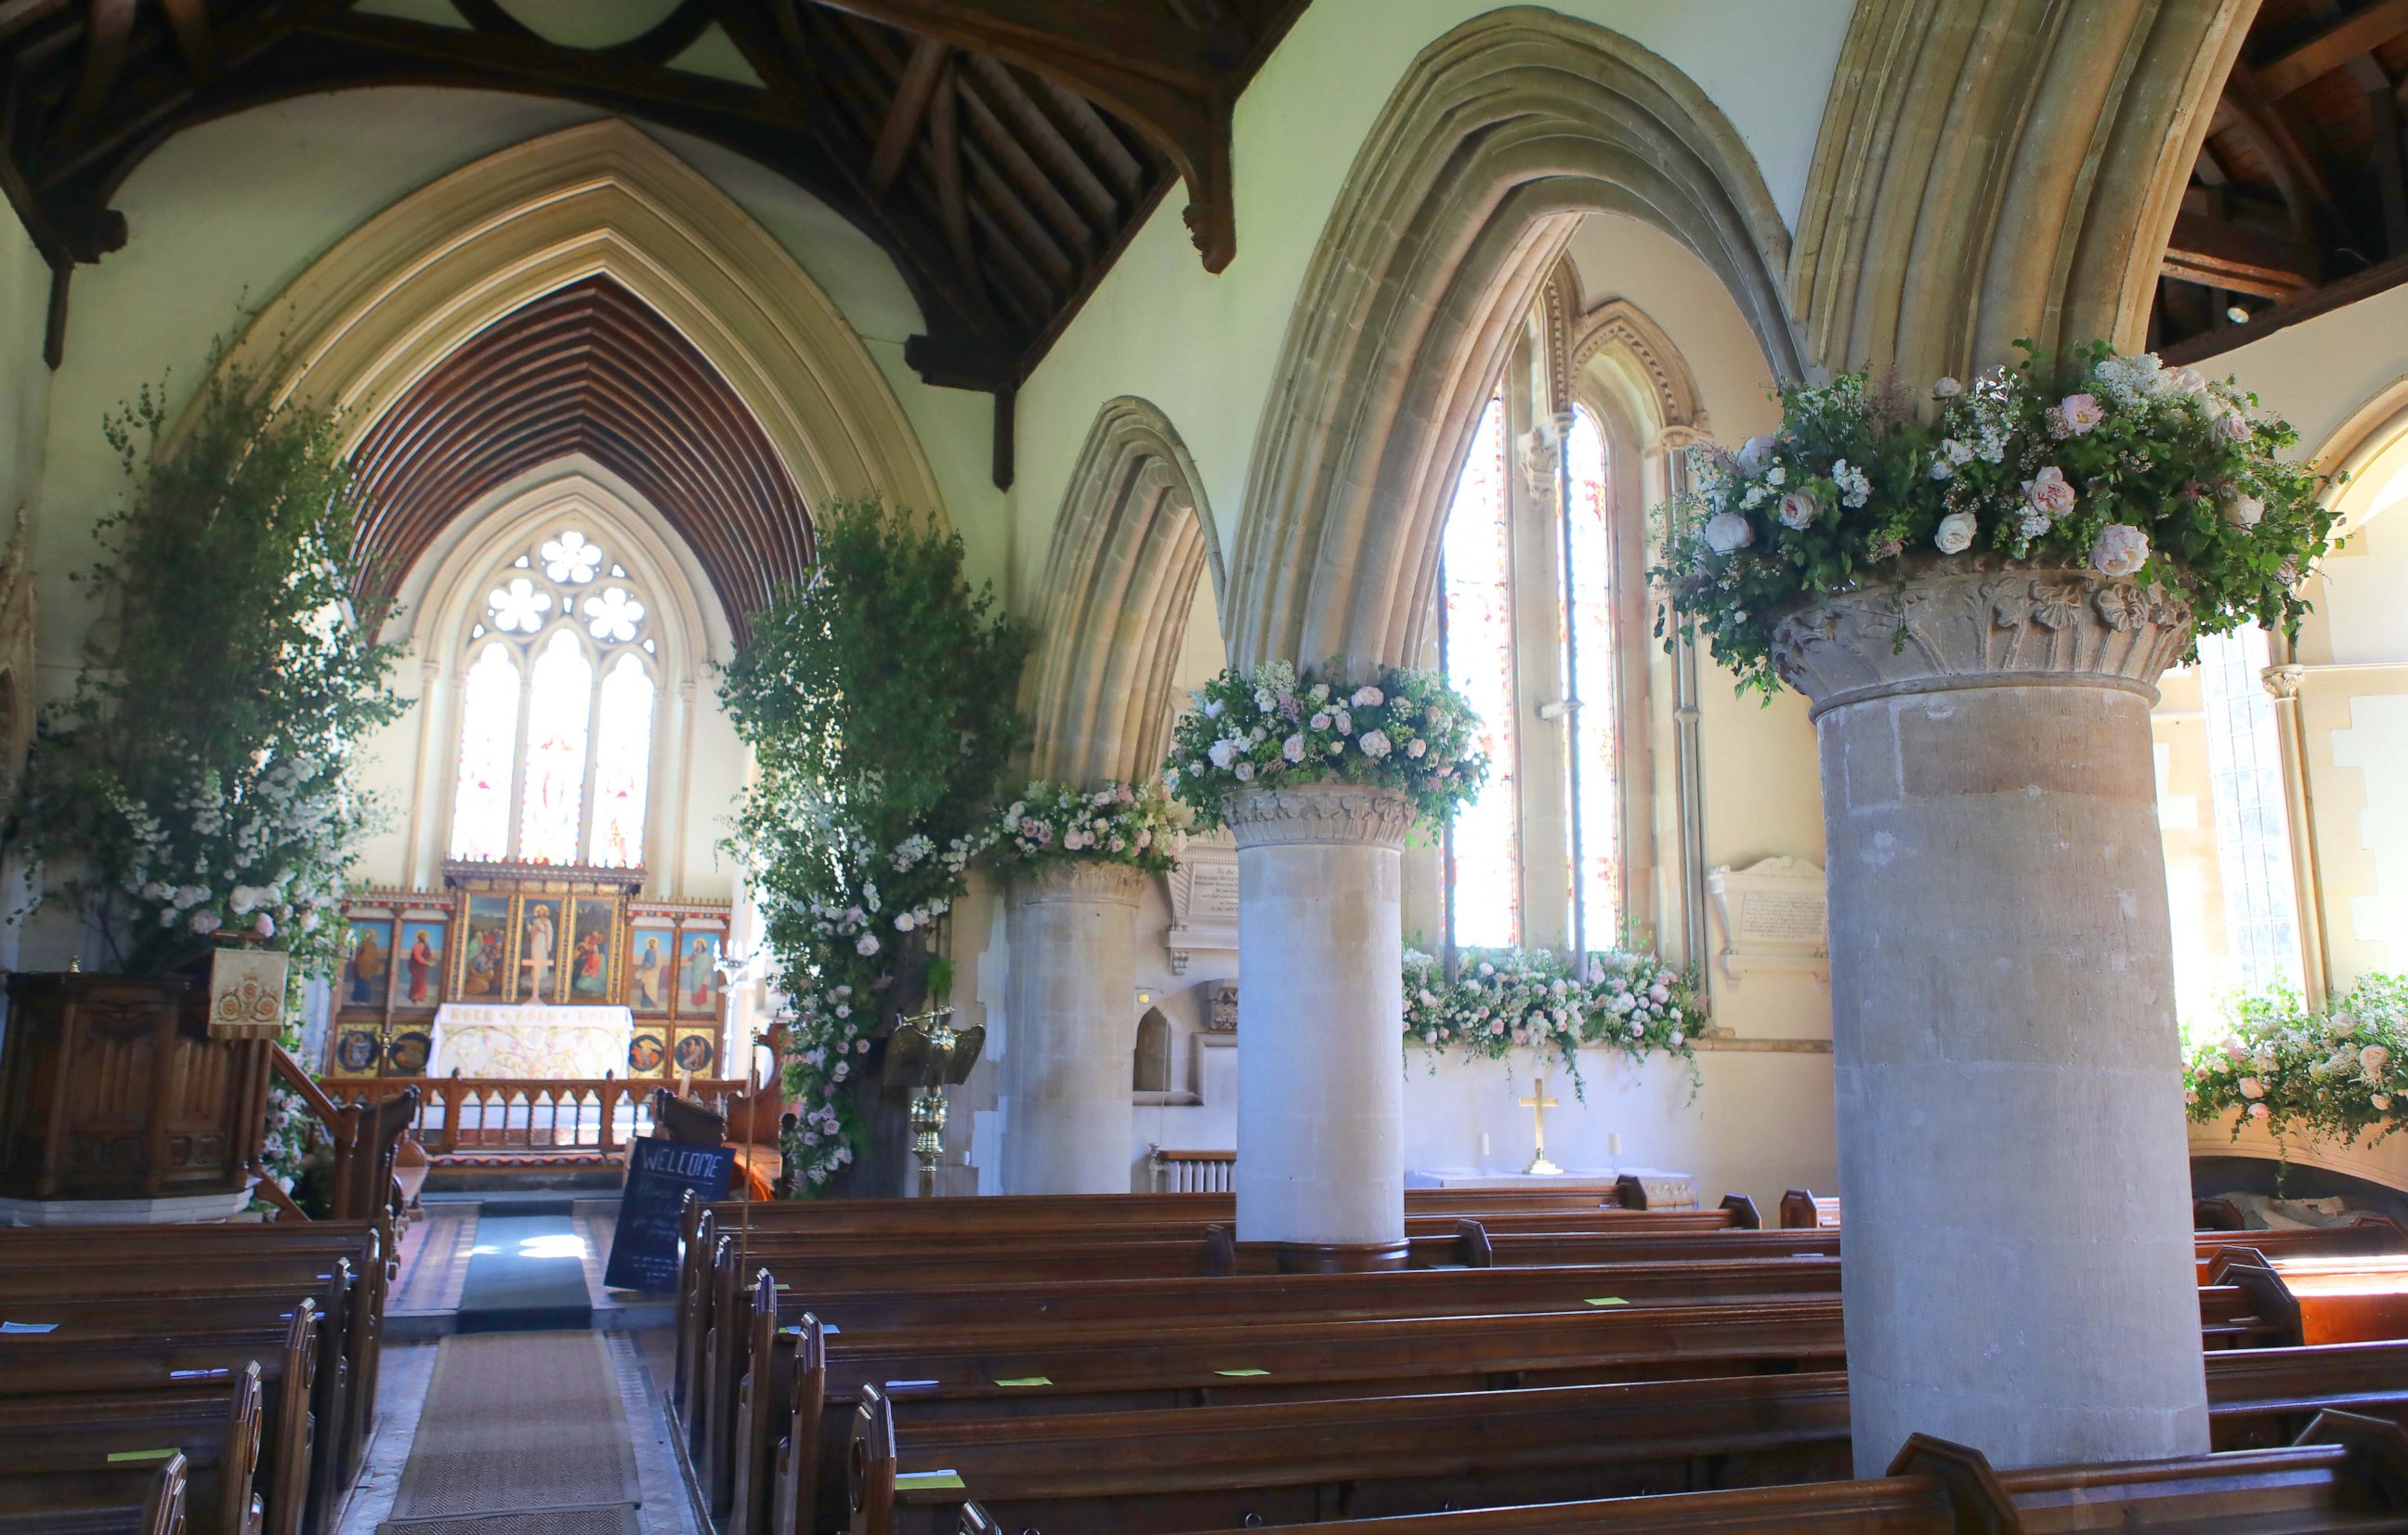 PHOTO: The flowers inside St. Marks church where Pippa Mathews had her wedding, on May 22, 2017, in Englefield, U.K. 